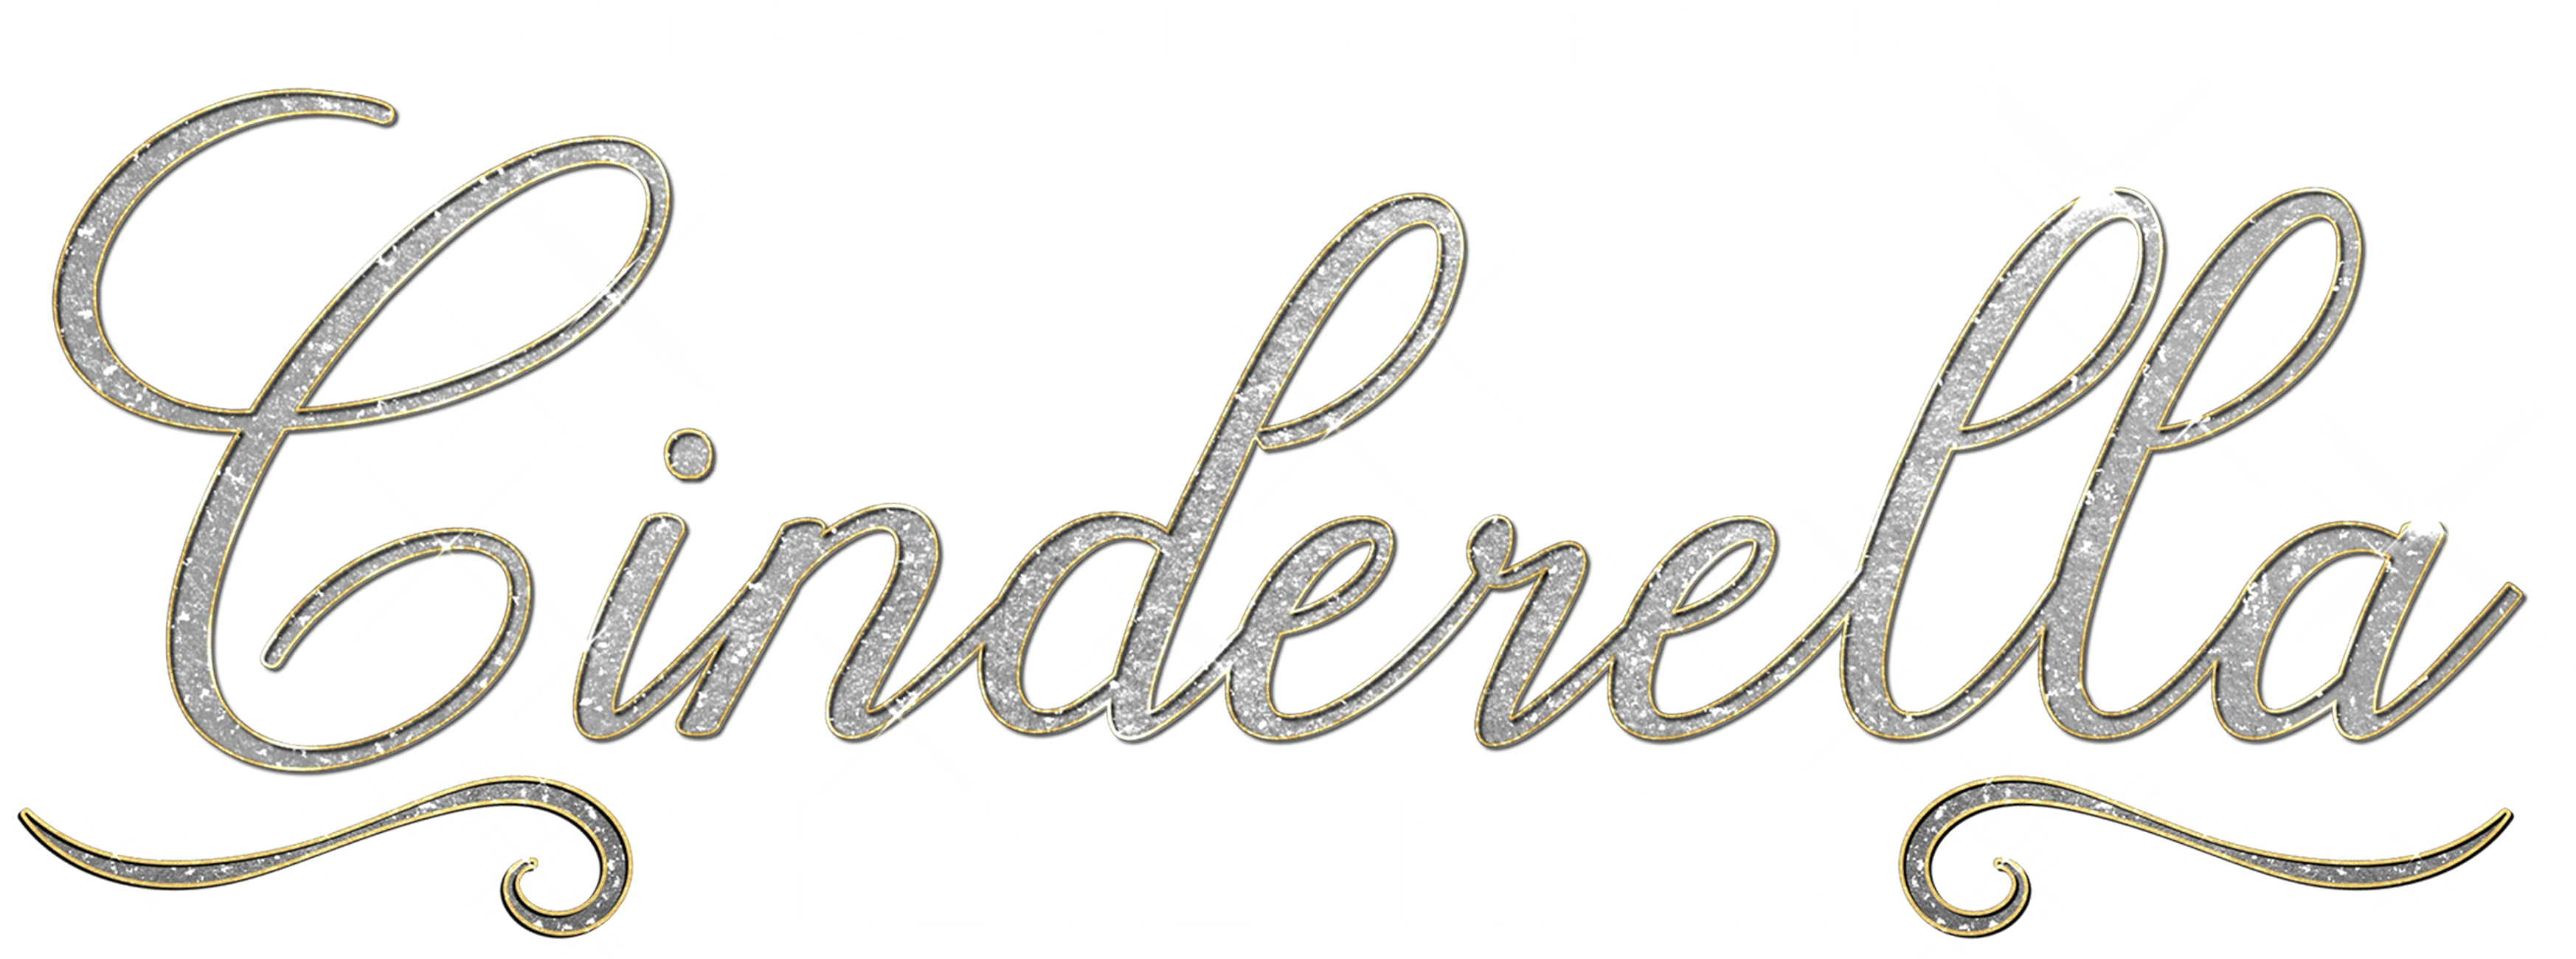 Cinderella: The Reunion, A Special Edition of 20/20 logo